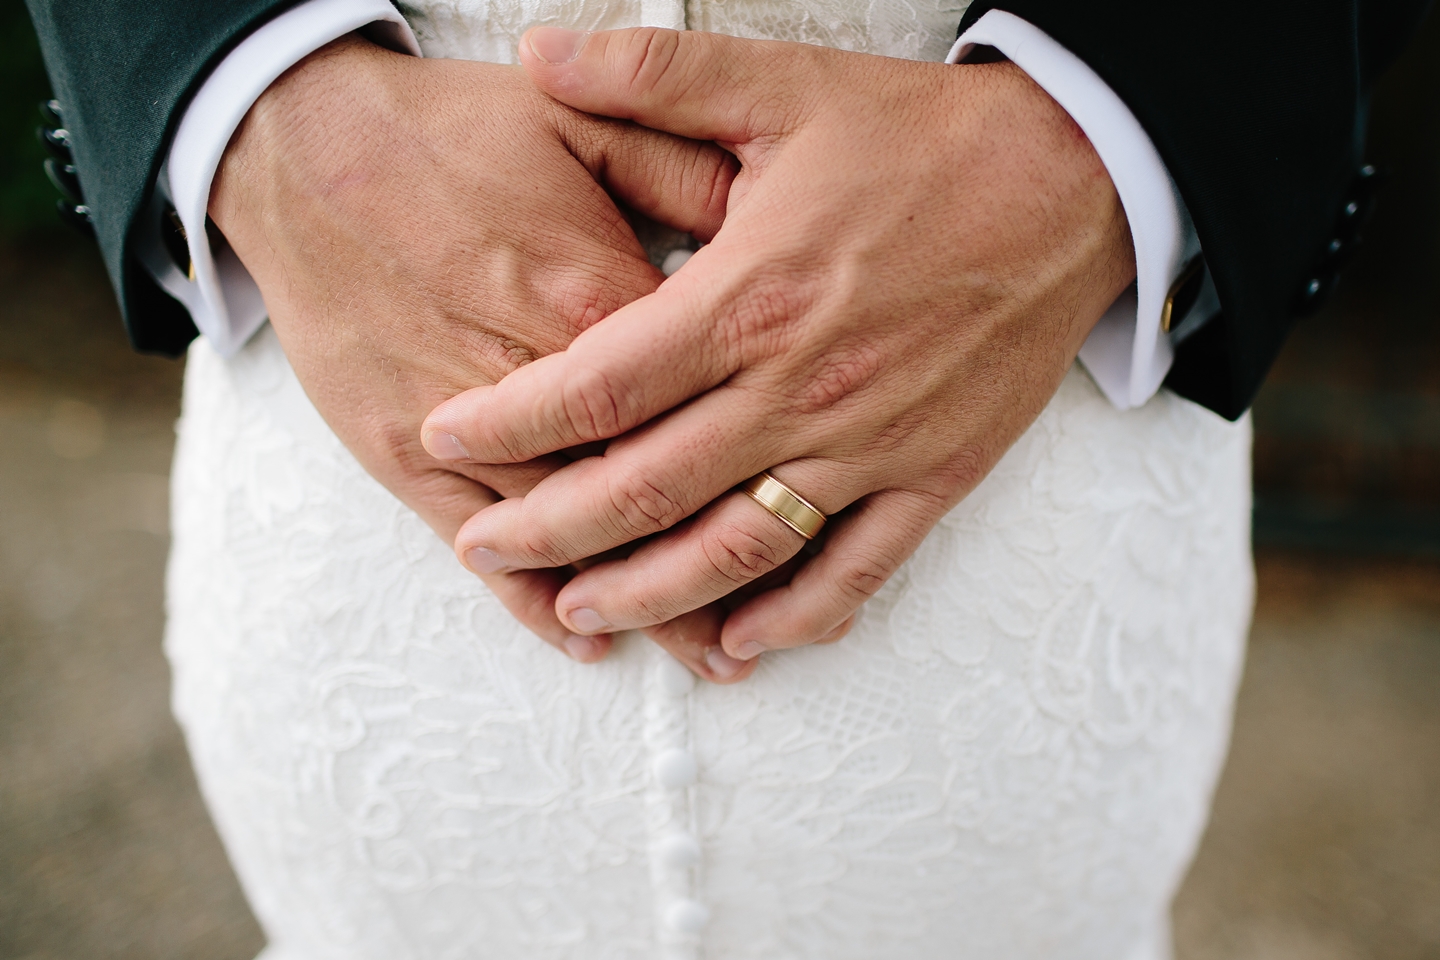 Bec & Callum Real Wedding The ring! #wedding #realwedding #weddingideas #weddingphotos